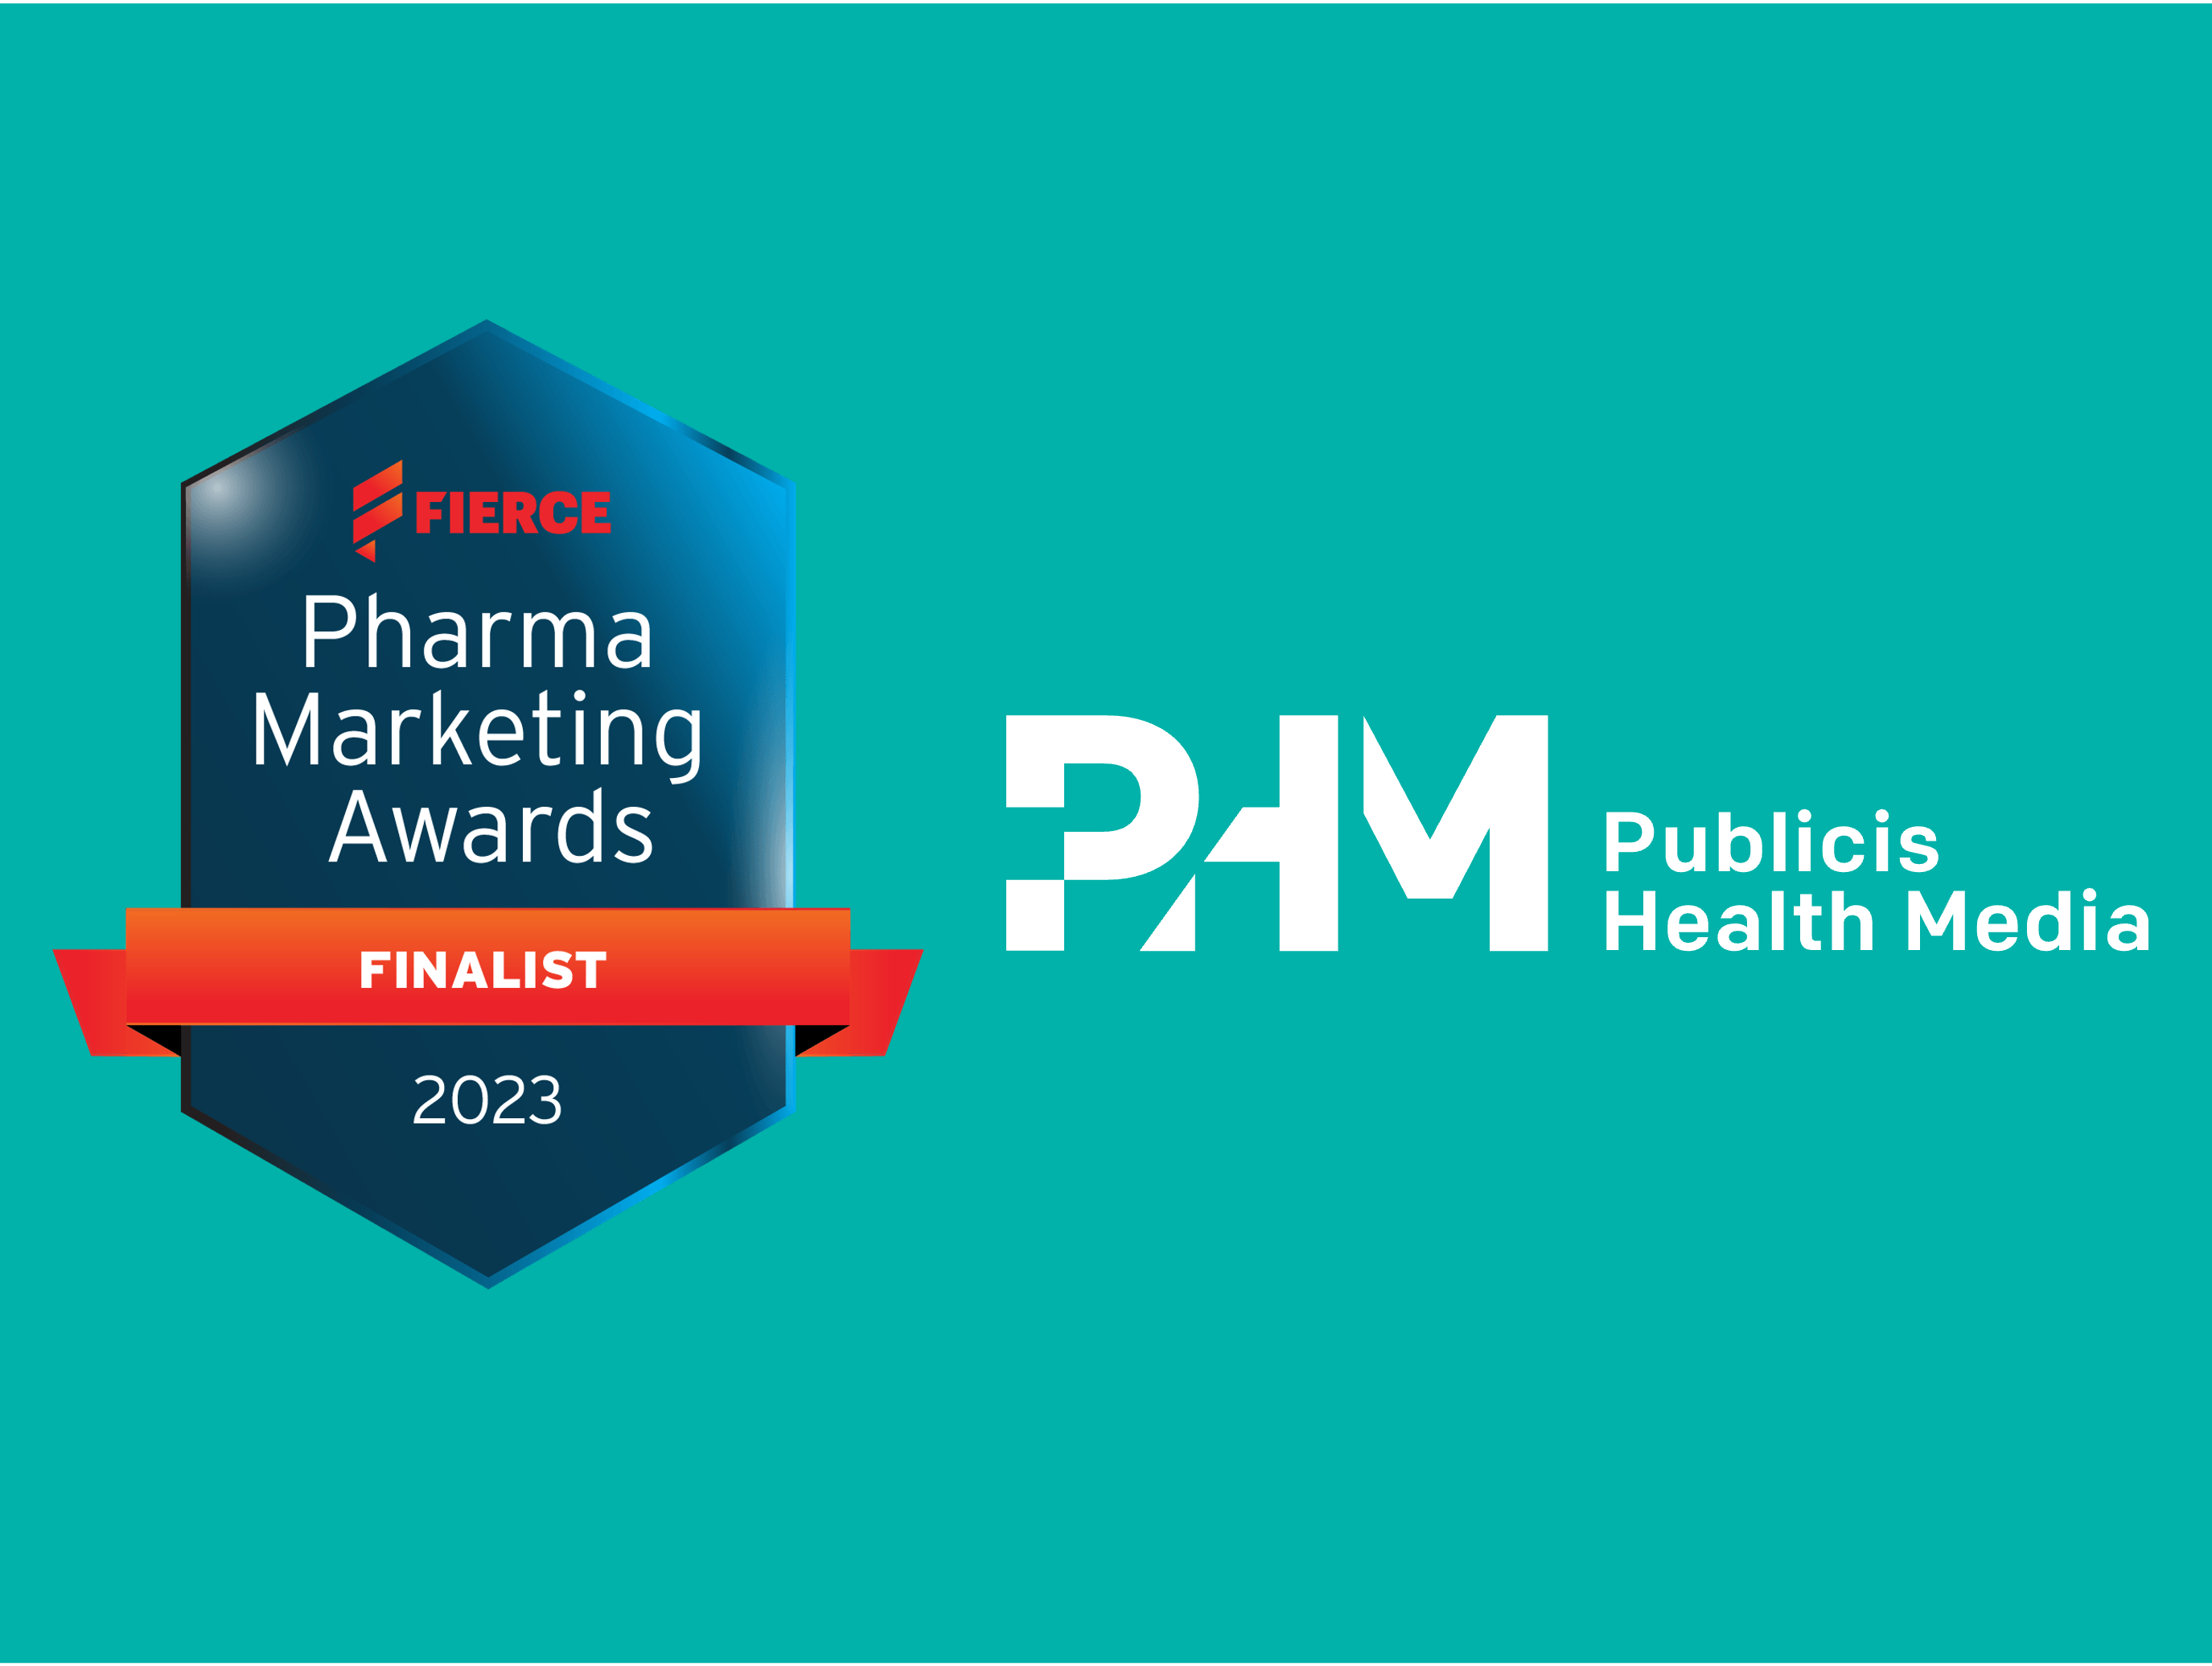 Fierce Pharma on LinkedIn: Fierce Pharma Marketing Awards